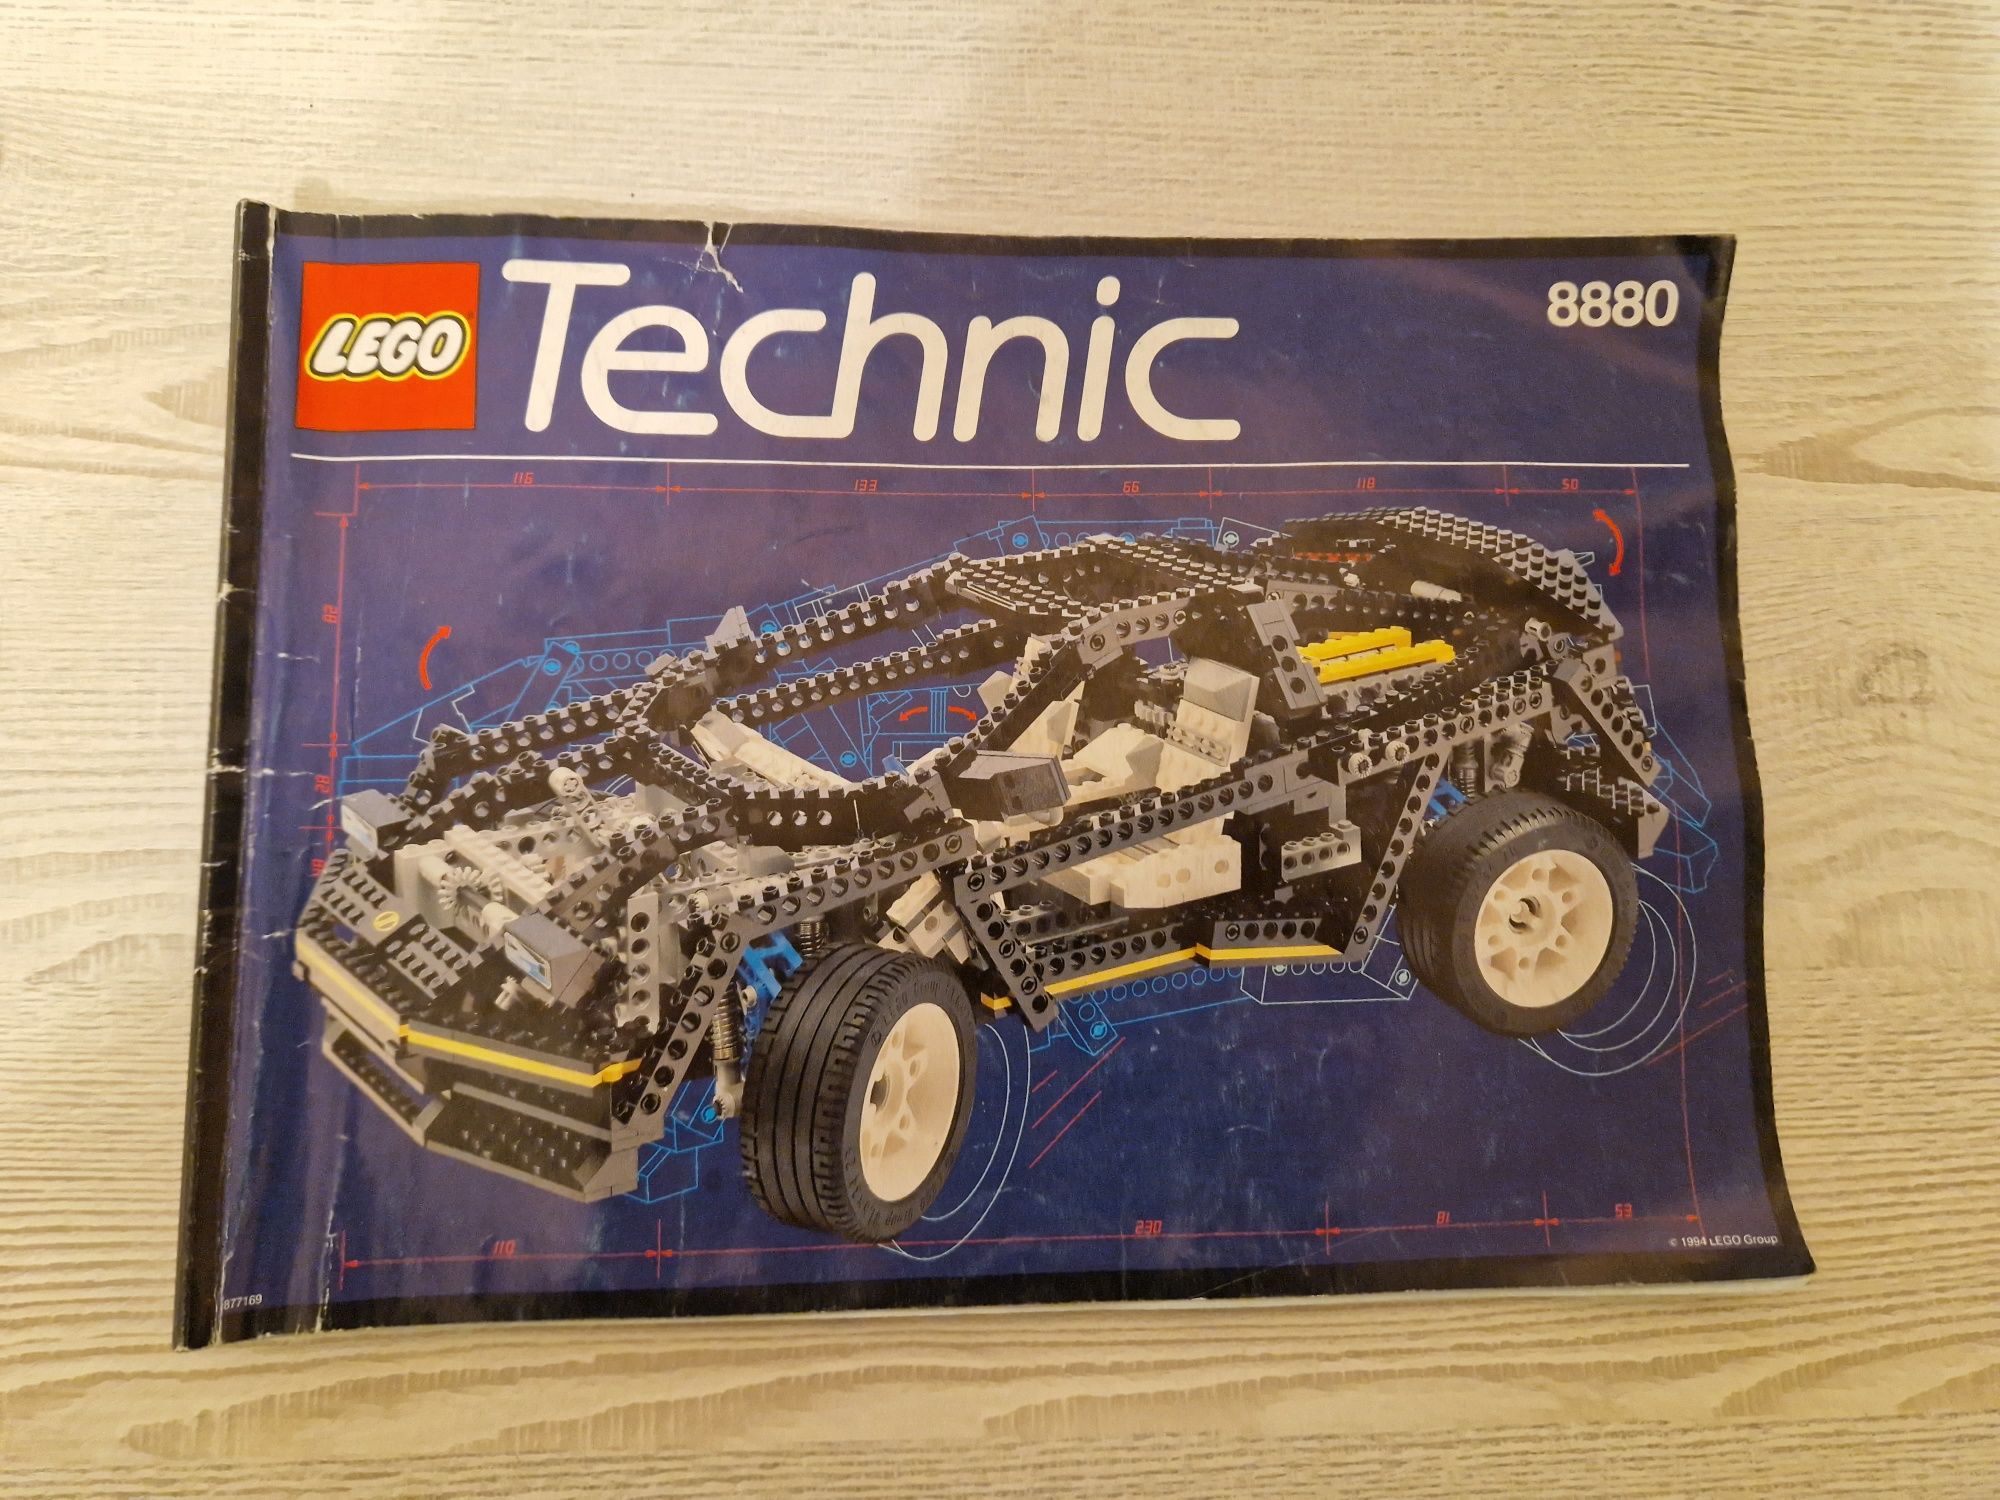 Lego 8880 technic.